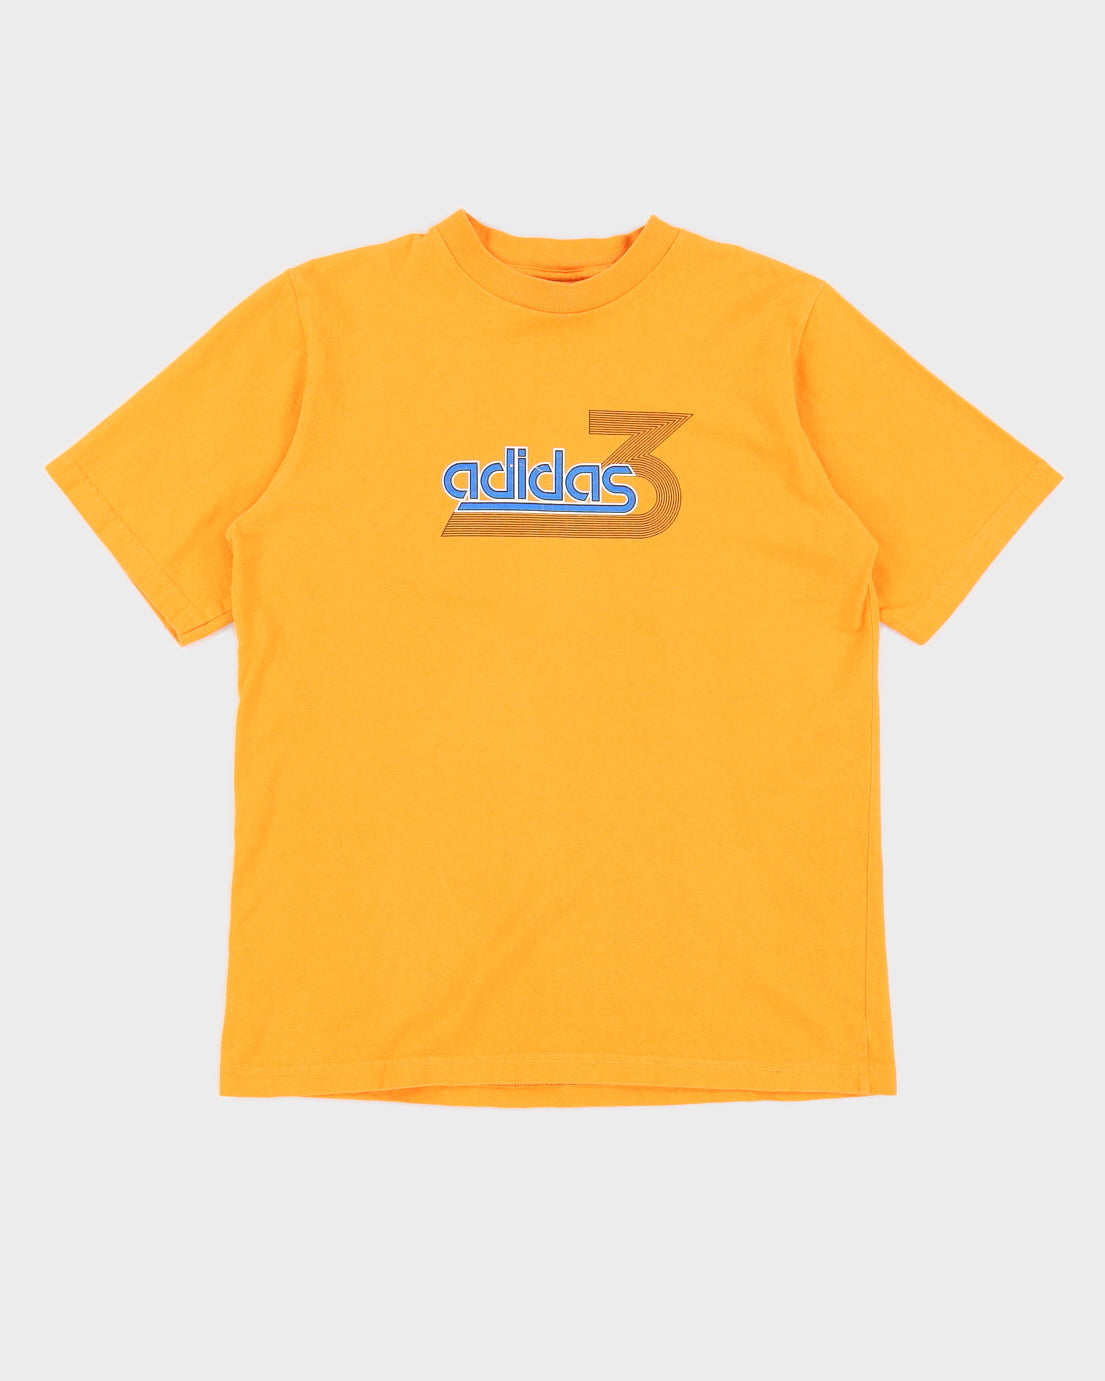 00s Adidas Orange T-Shirt - M